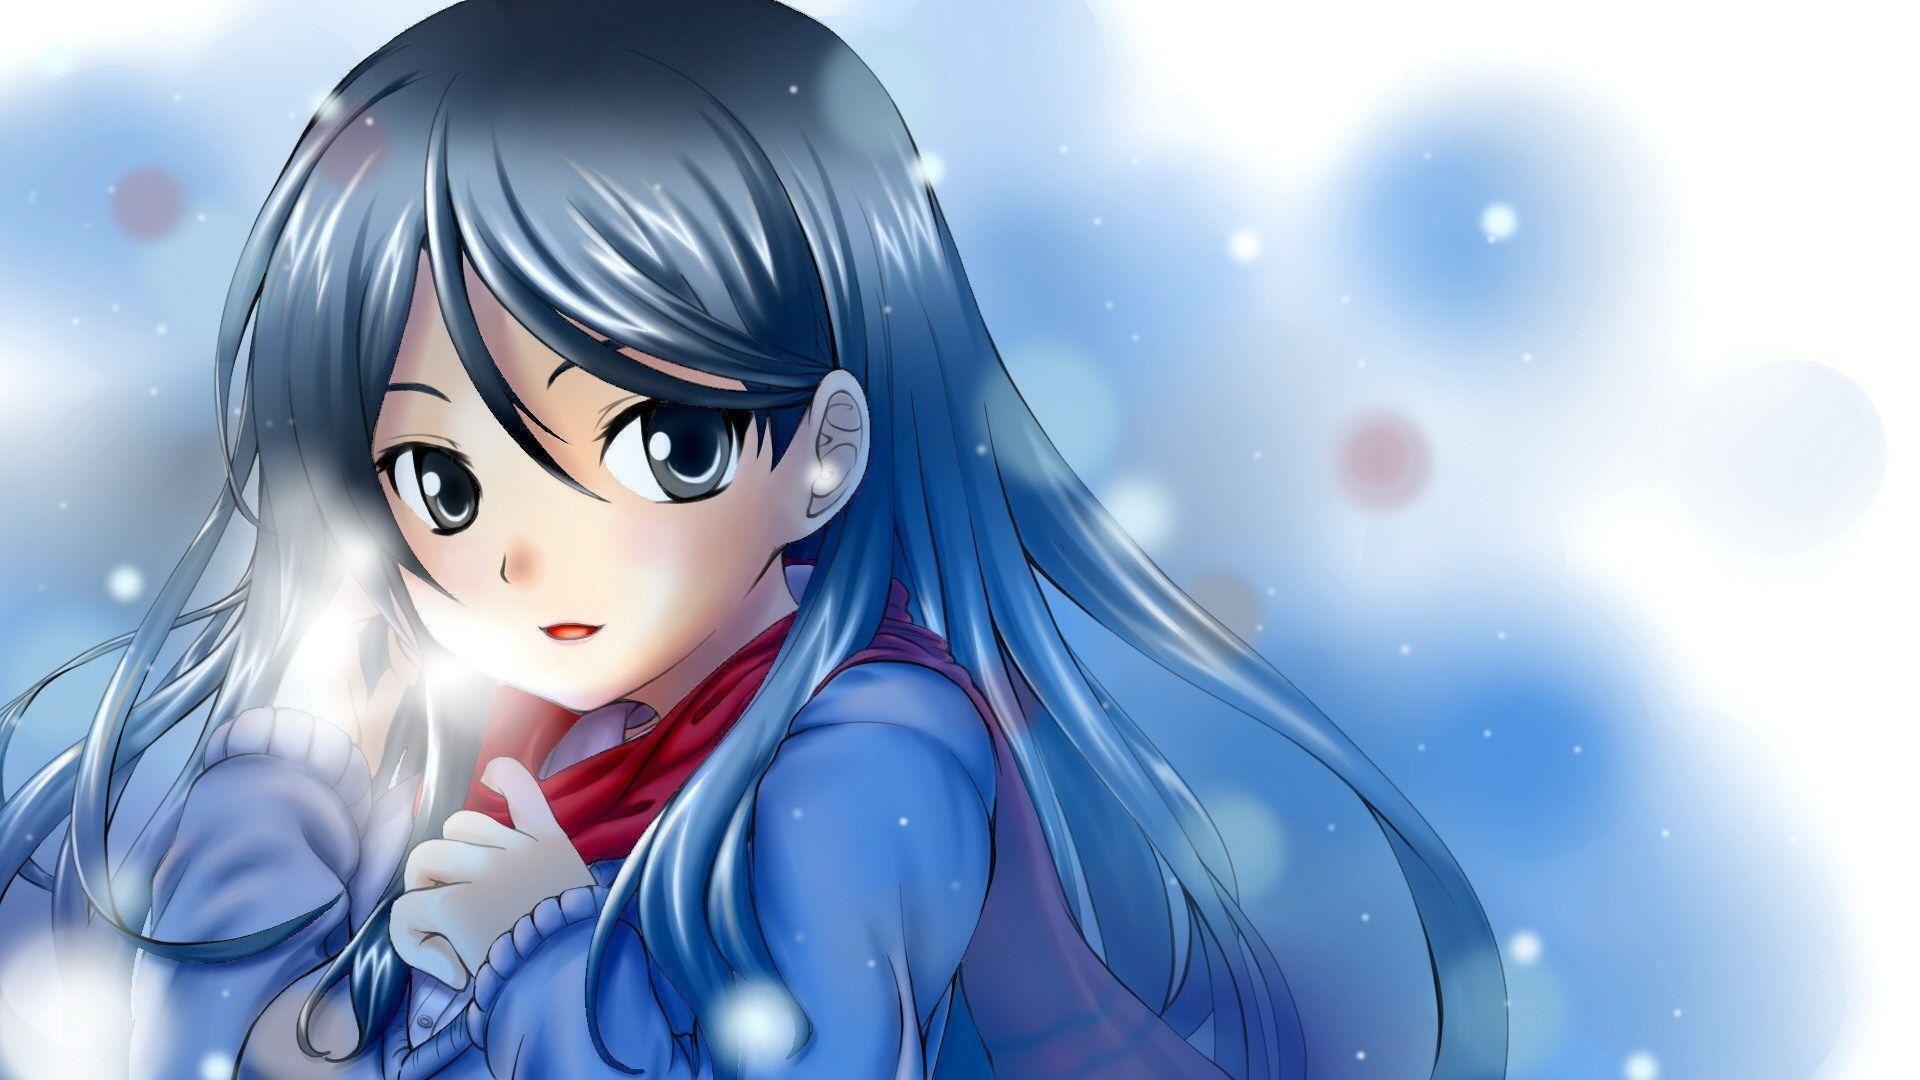 Anime Emo Wallpaper. Wallpaper, Background, Image, Art Photo